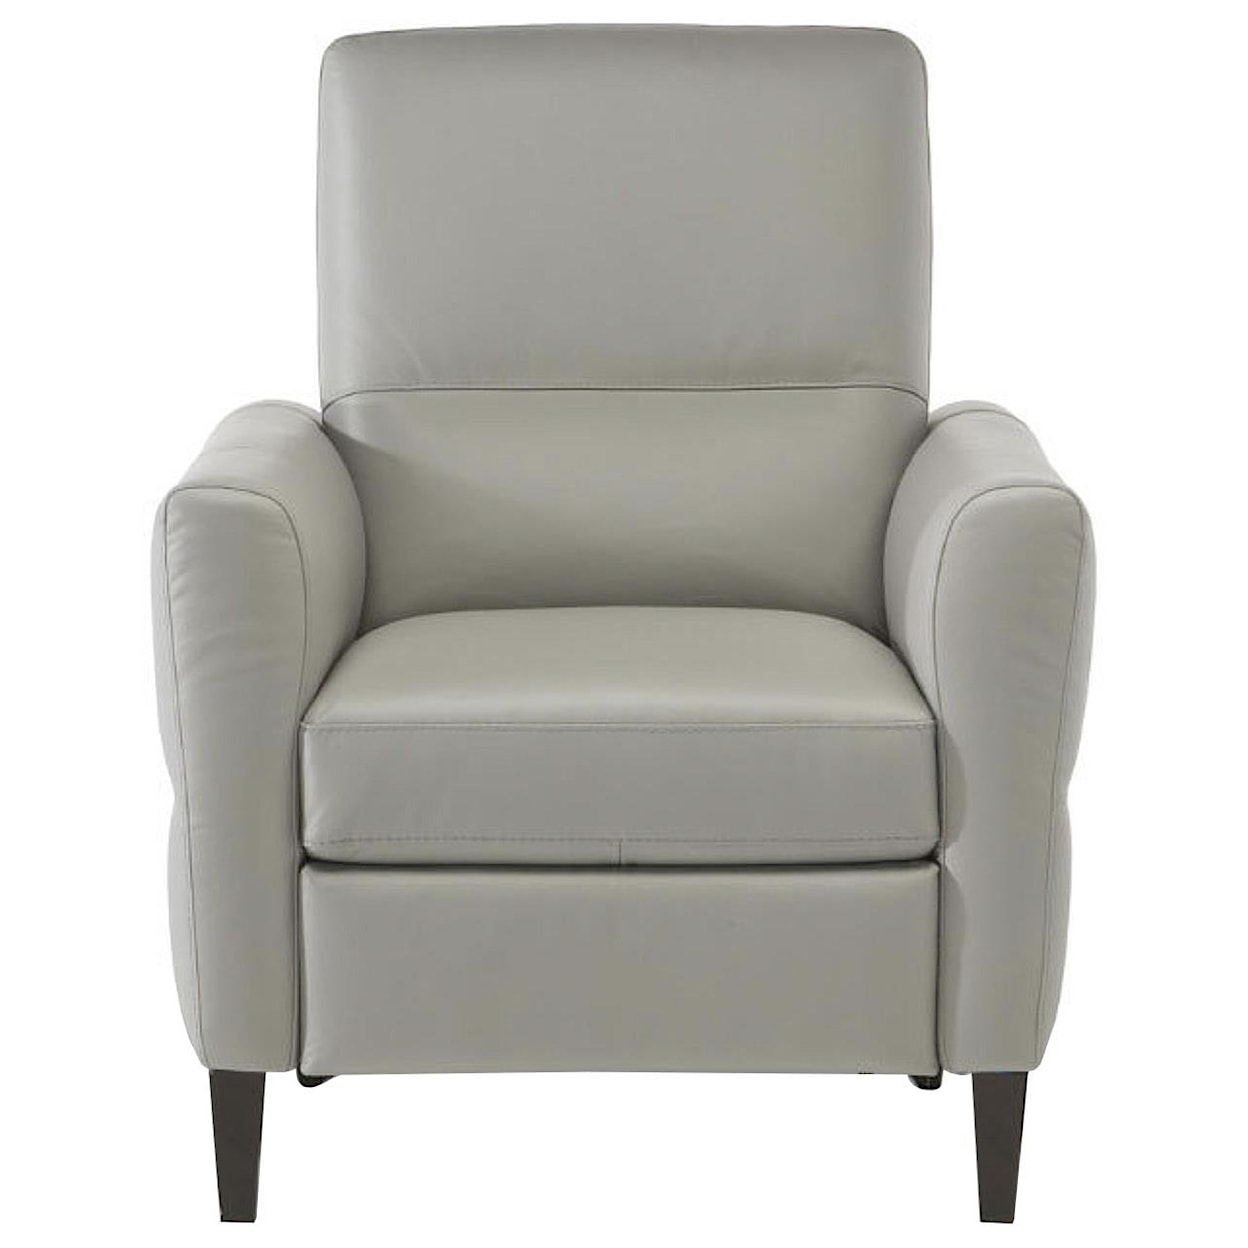 Natuzzi Editions 100% Italian Leather Upholstered Chairs